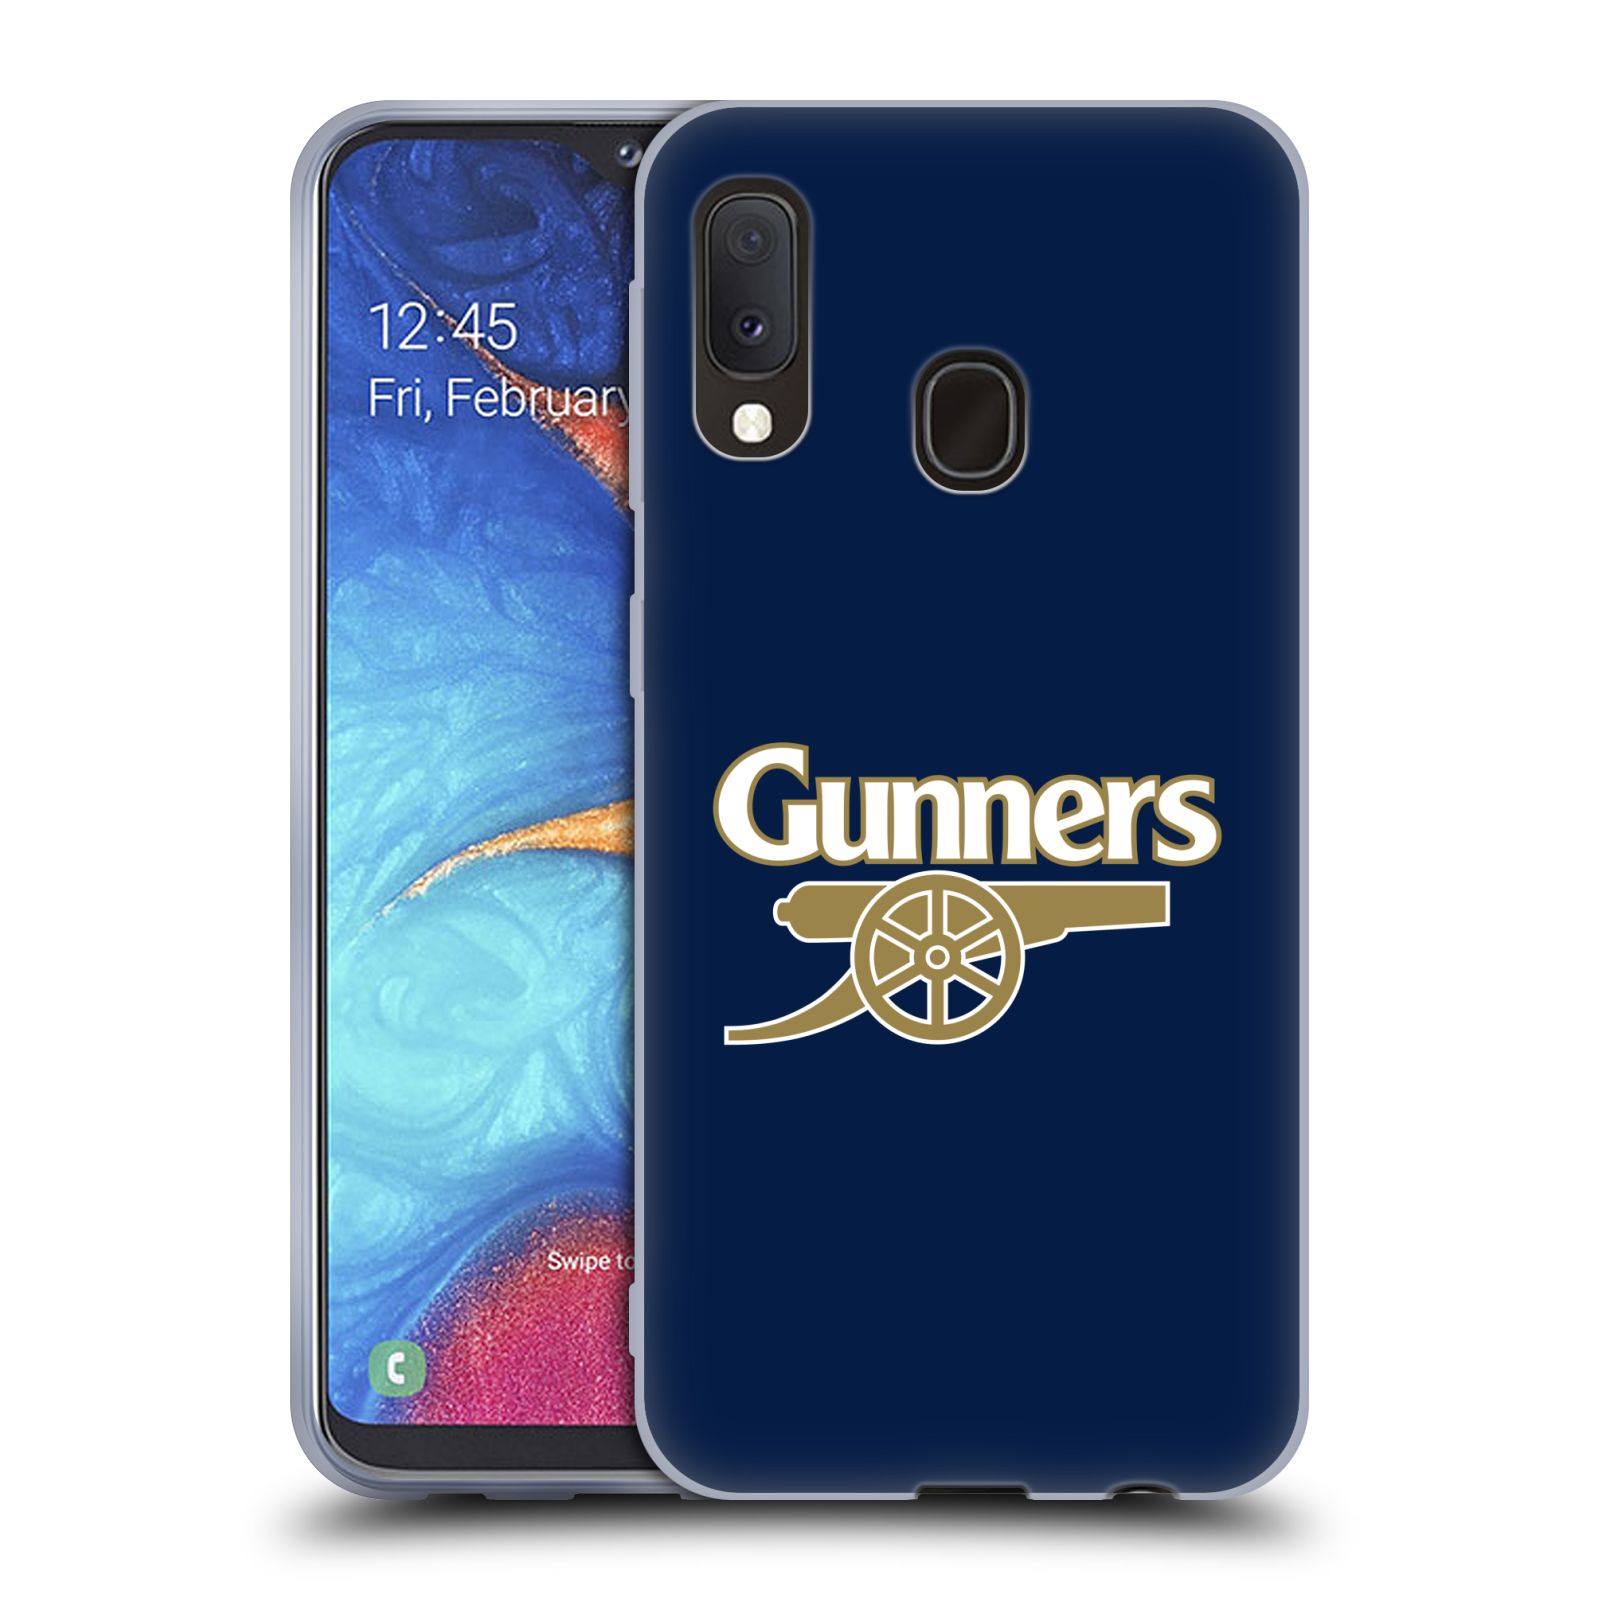 Silikonové pouzdro na mobil Samsung Galaxy A20e - Head Case - Arsenal FC - Gunners (Silikonový kryt, obal, pouzdro na mobilní telefon s motivem klubu Arsenal FC - Gunners pro Samsung Galaxy A20e A202F Dual SIM)